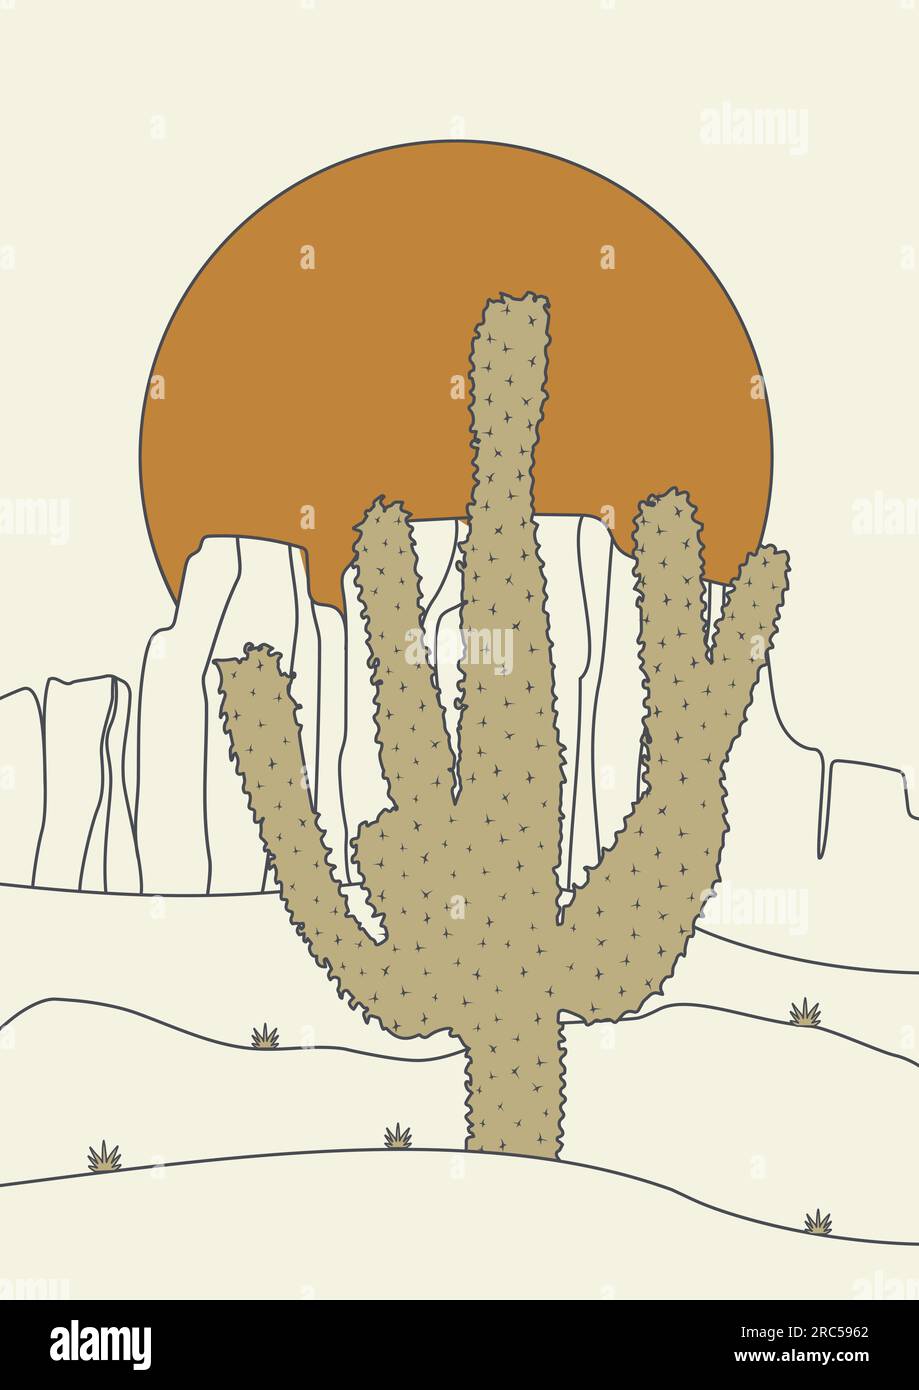 Lineare Cartoon-Wüste mit plakat-Illustration in saguaro-Landschaft Stock Vektor